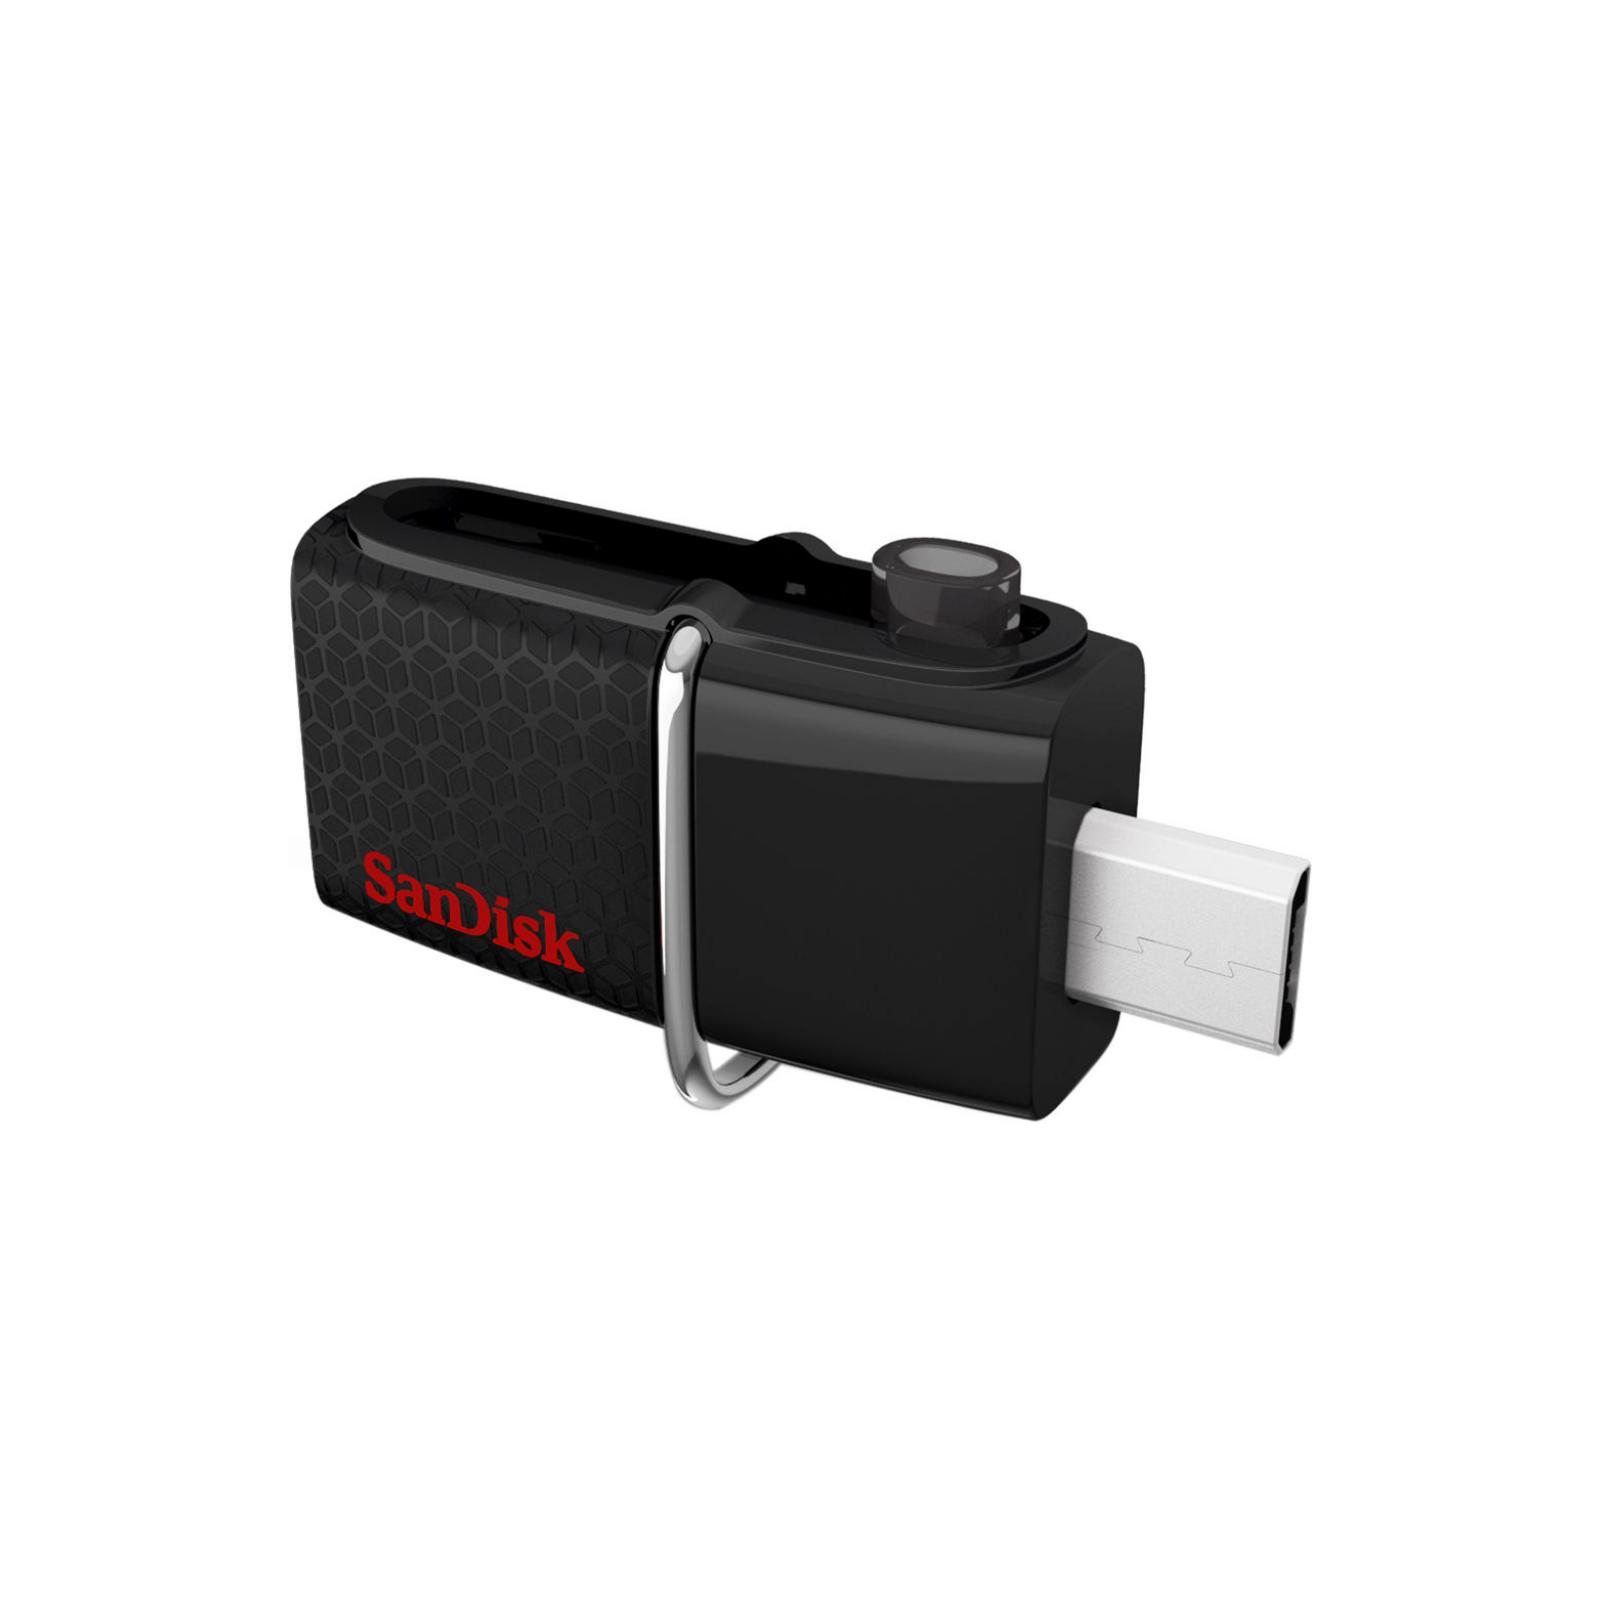 USB флеш накопитель SanDisk 16GB Ultra Dual Drive OTG Black USB 3.0 (SDDD2-016G-GAM46) изображение 5